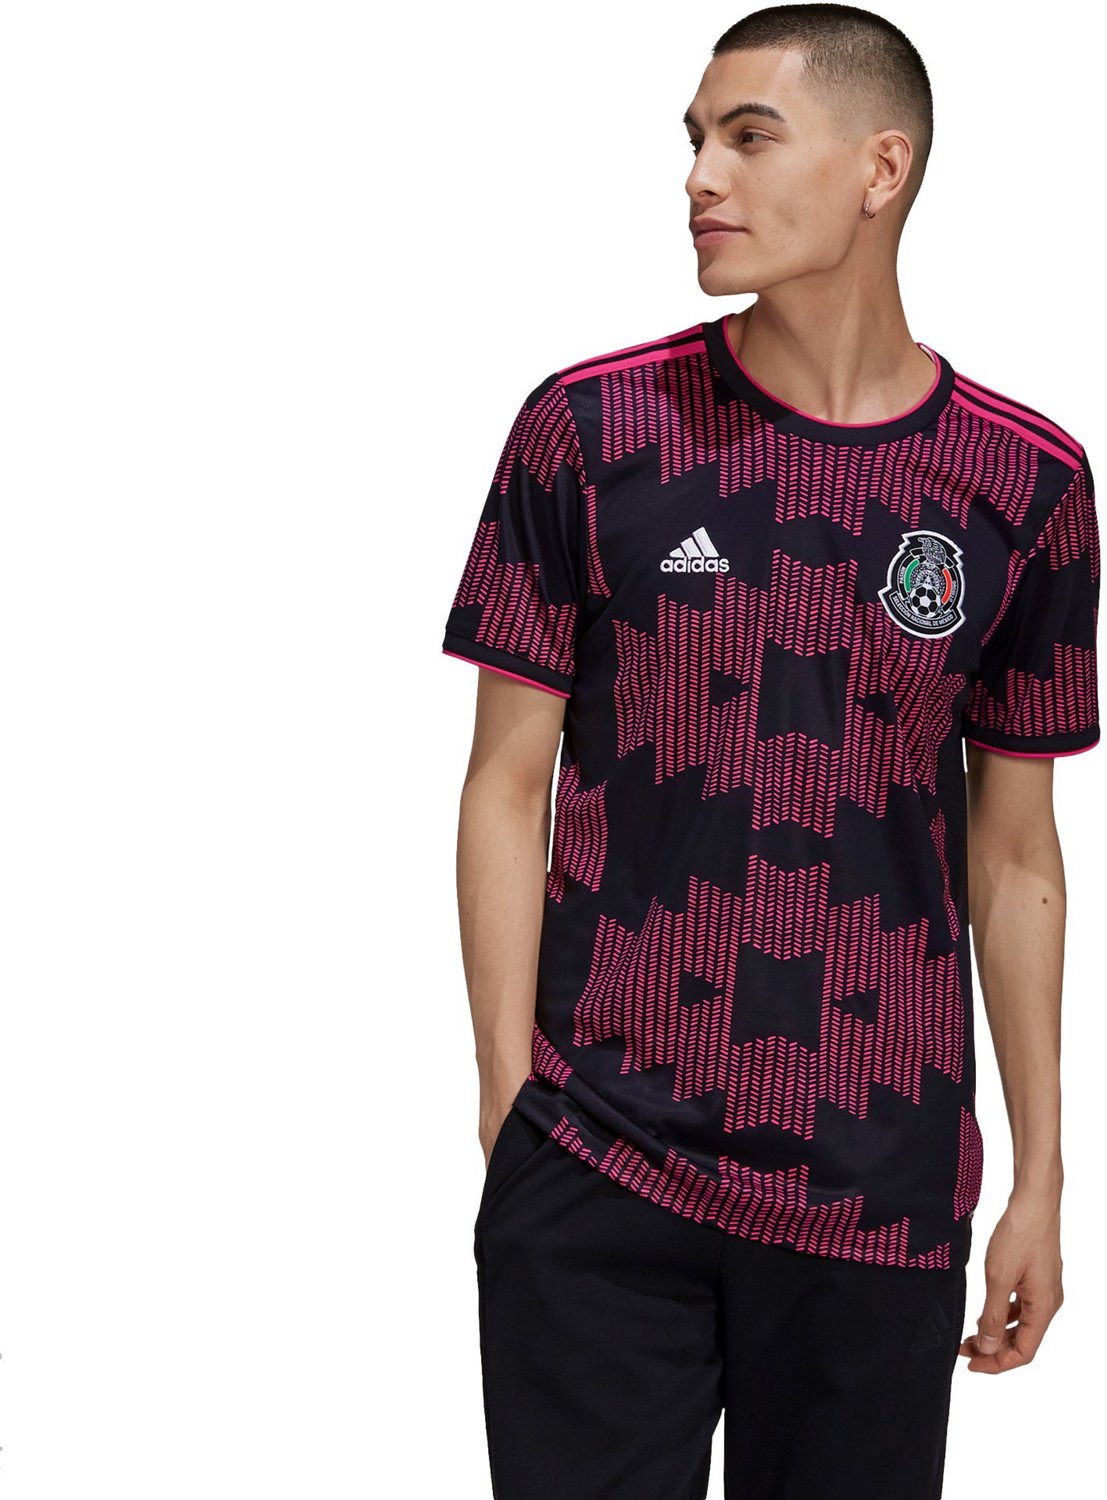 adidas, Shirts, Adidas Predator Soccer Athletic Shirt